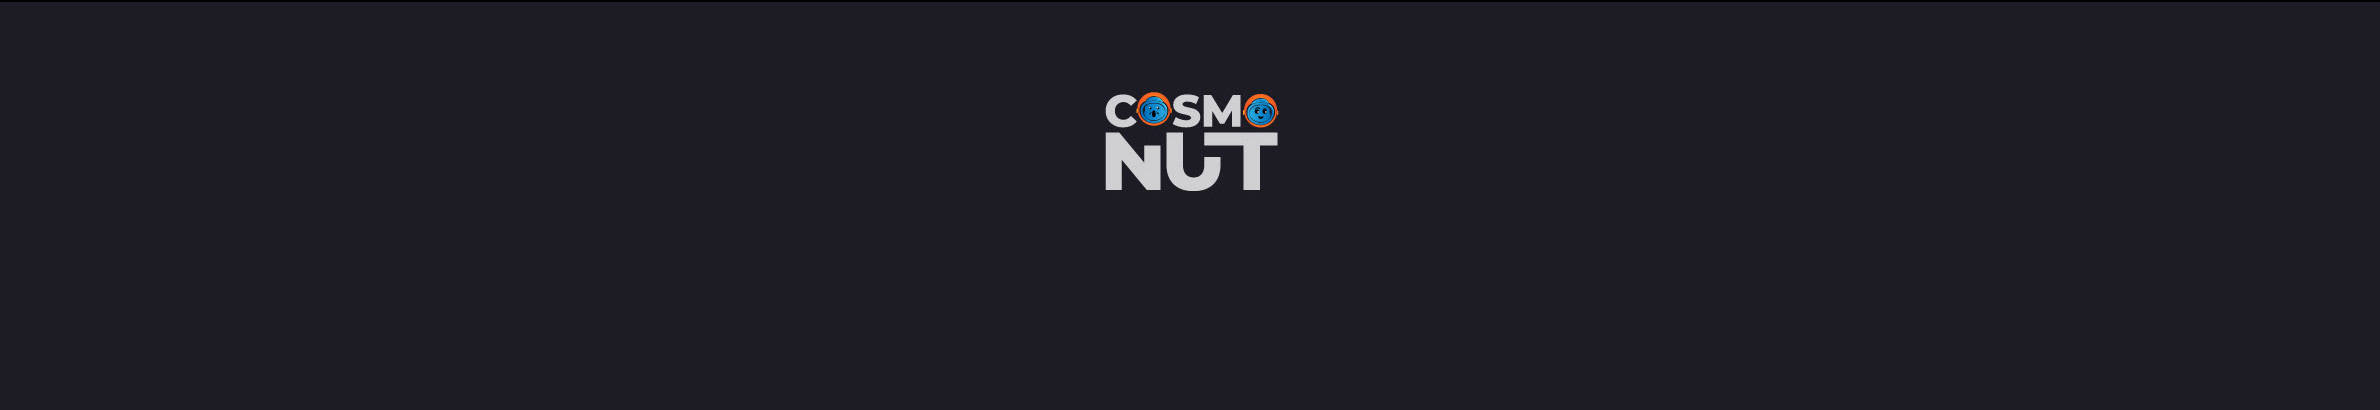 Baner profilu użytkownika EtoZhe Cosmonut